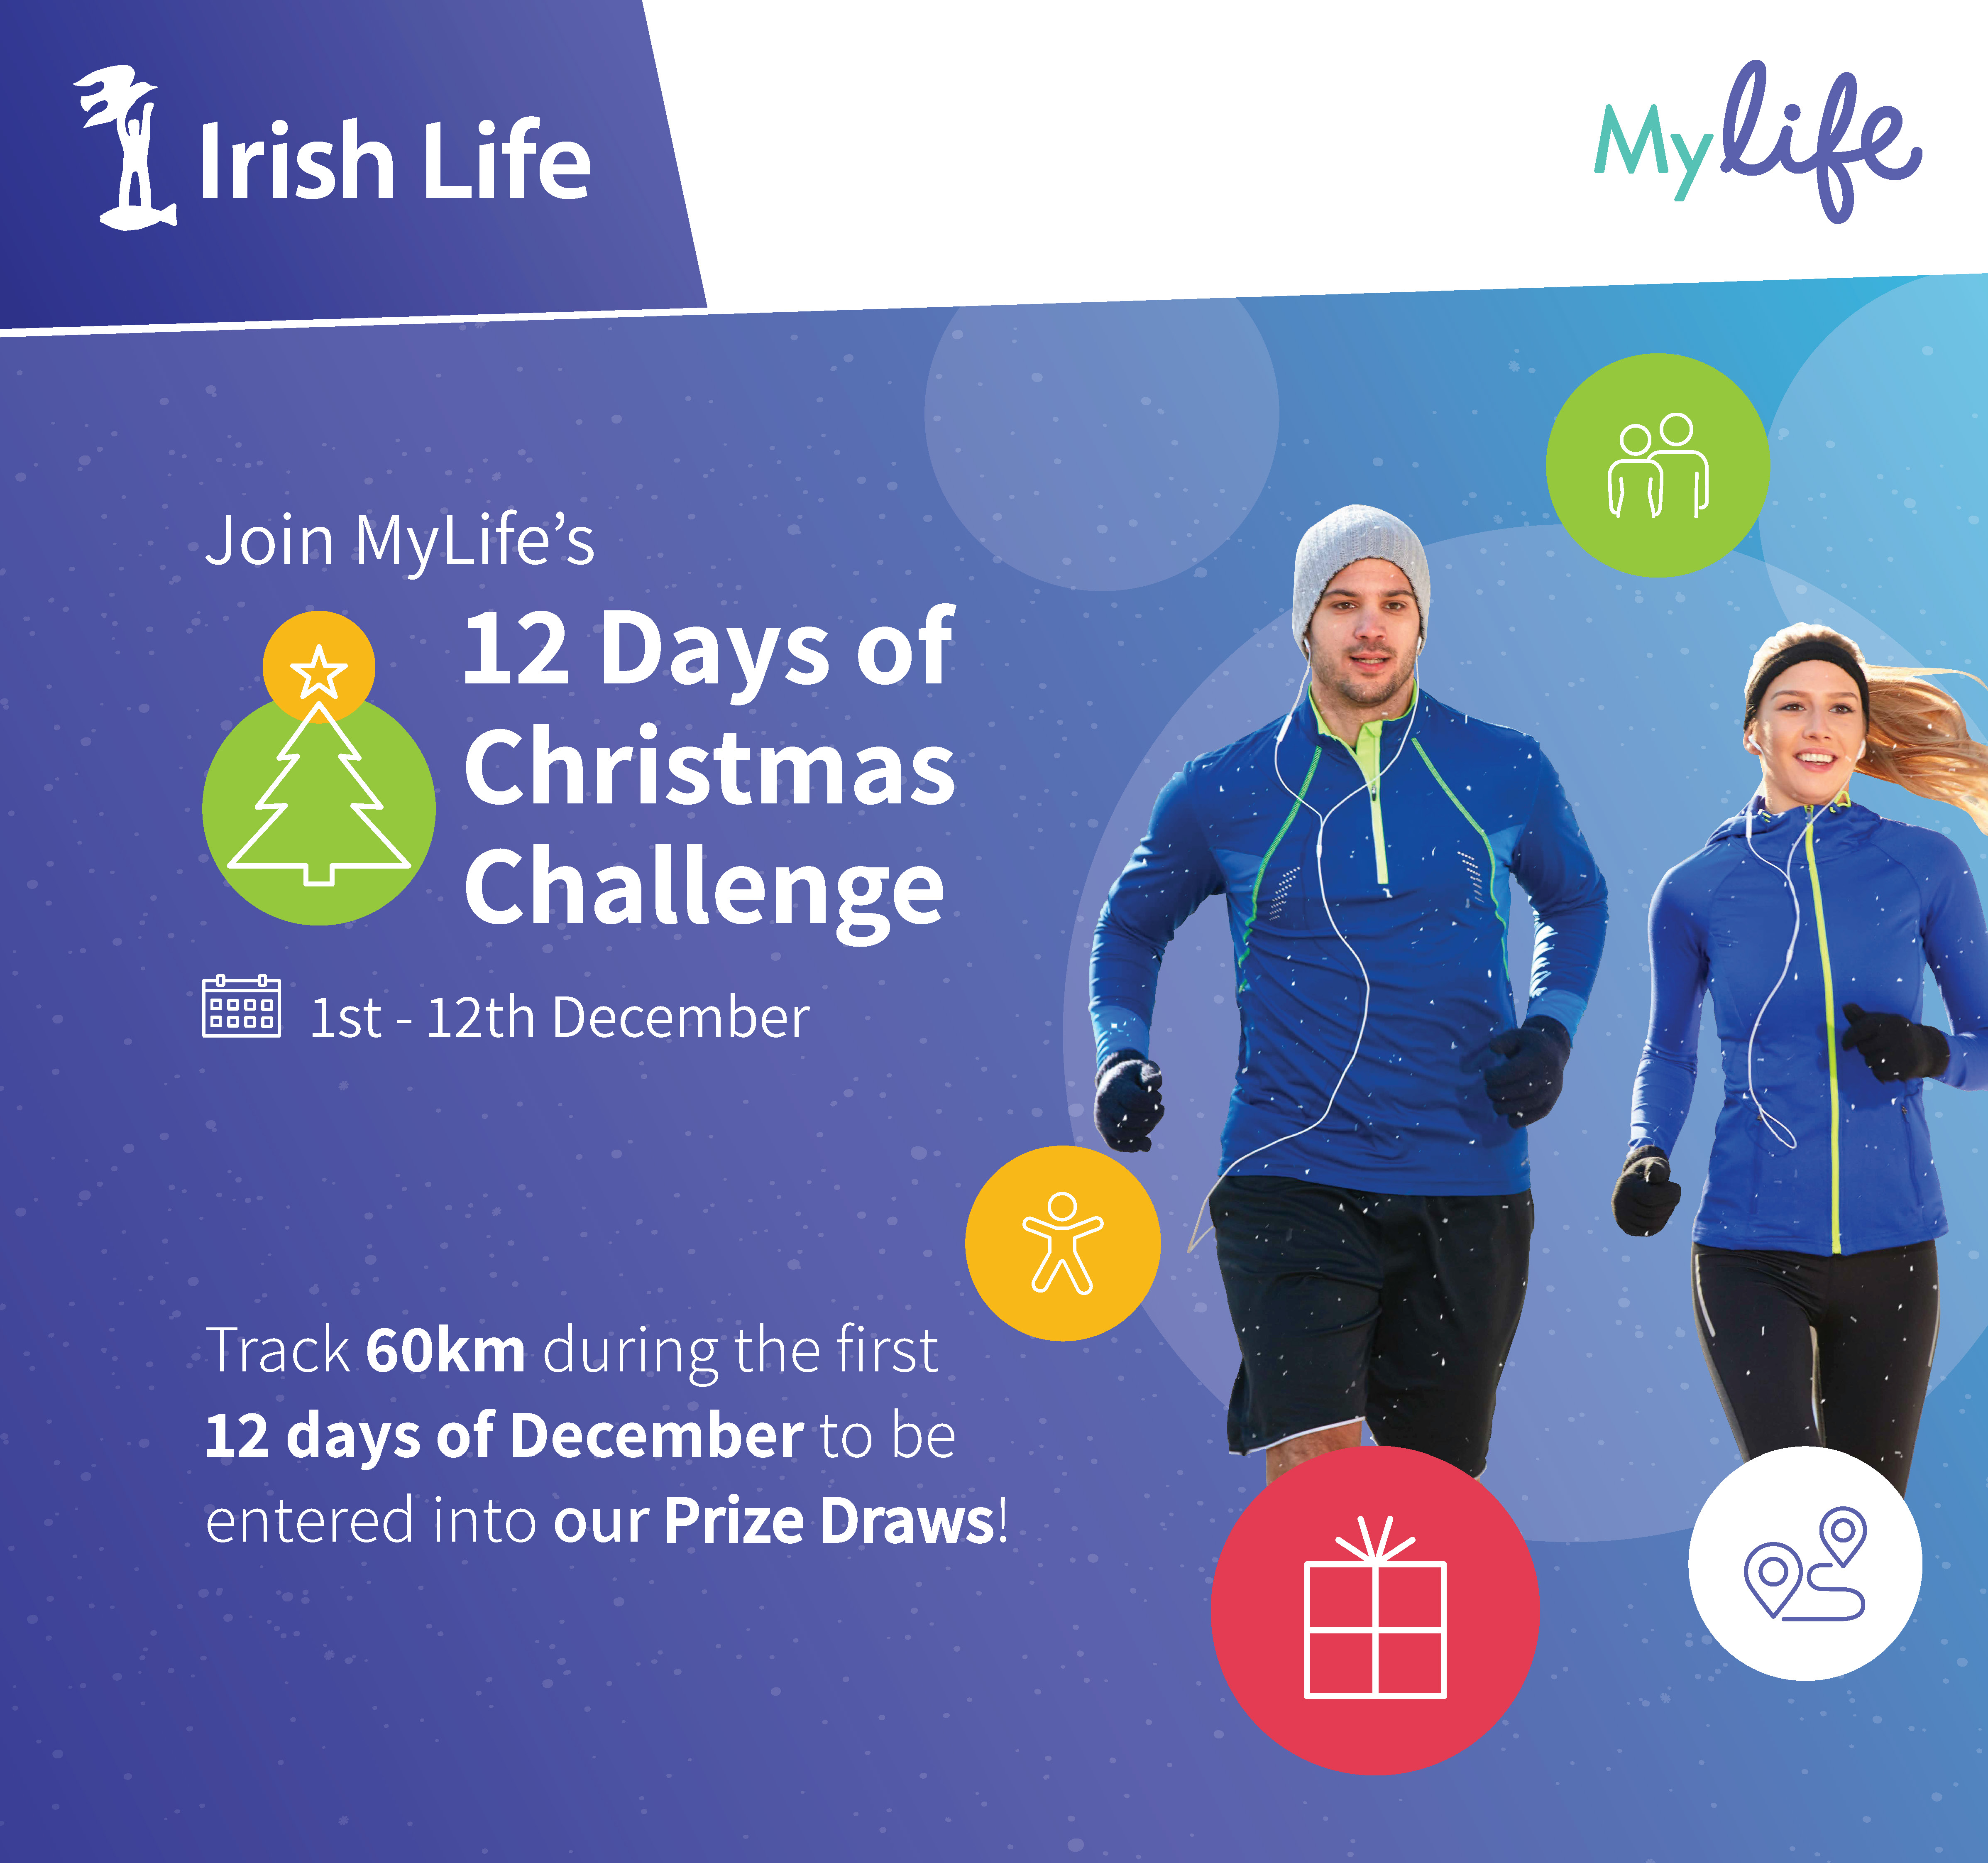 MyLife's 12 Days of Christmas Challenge